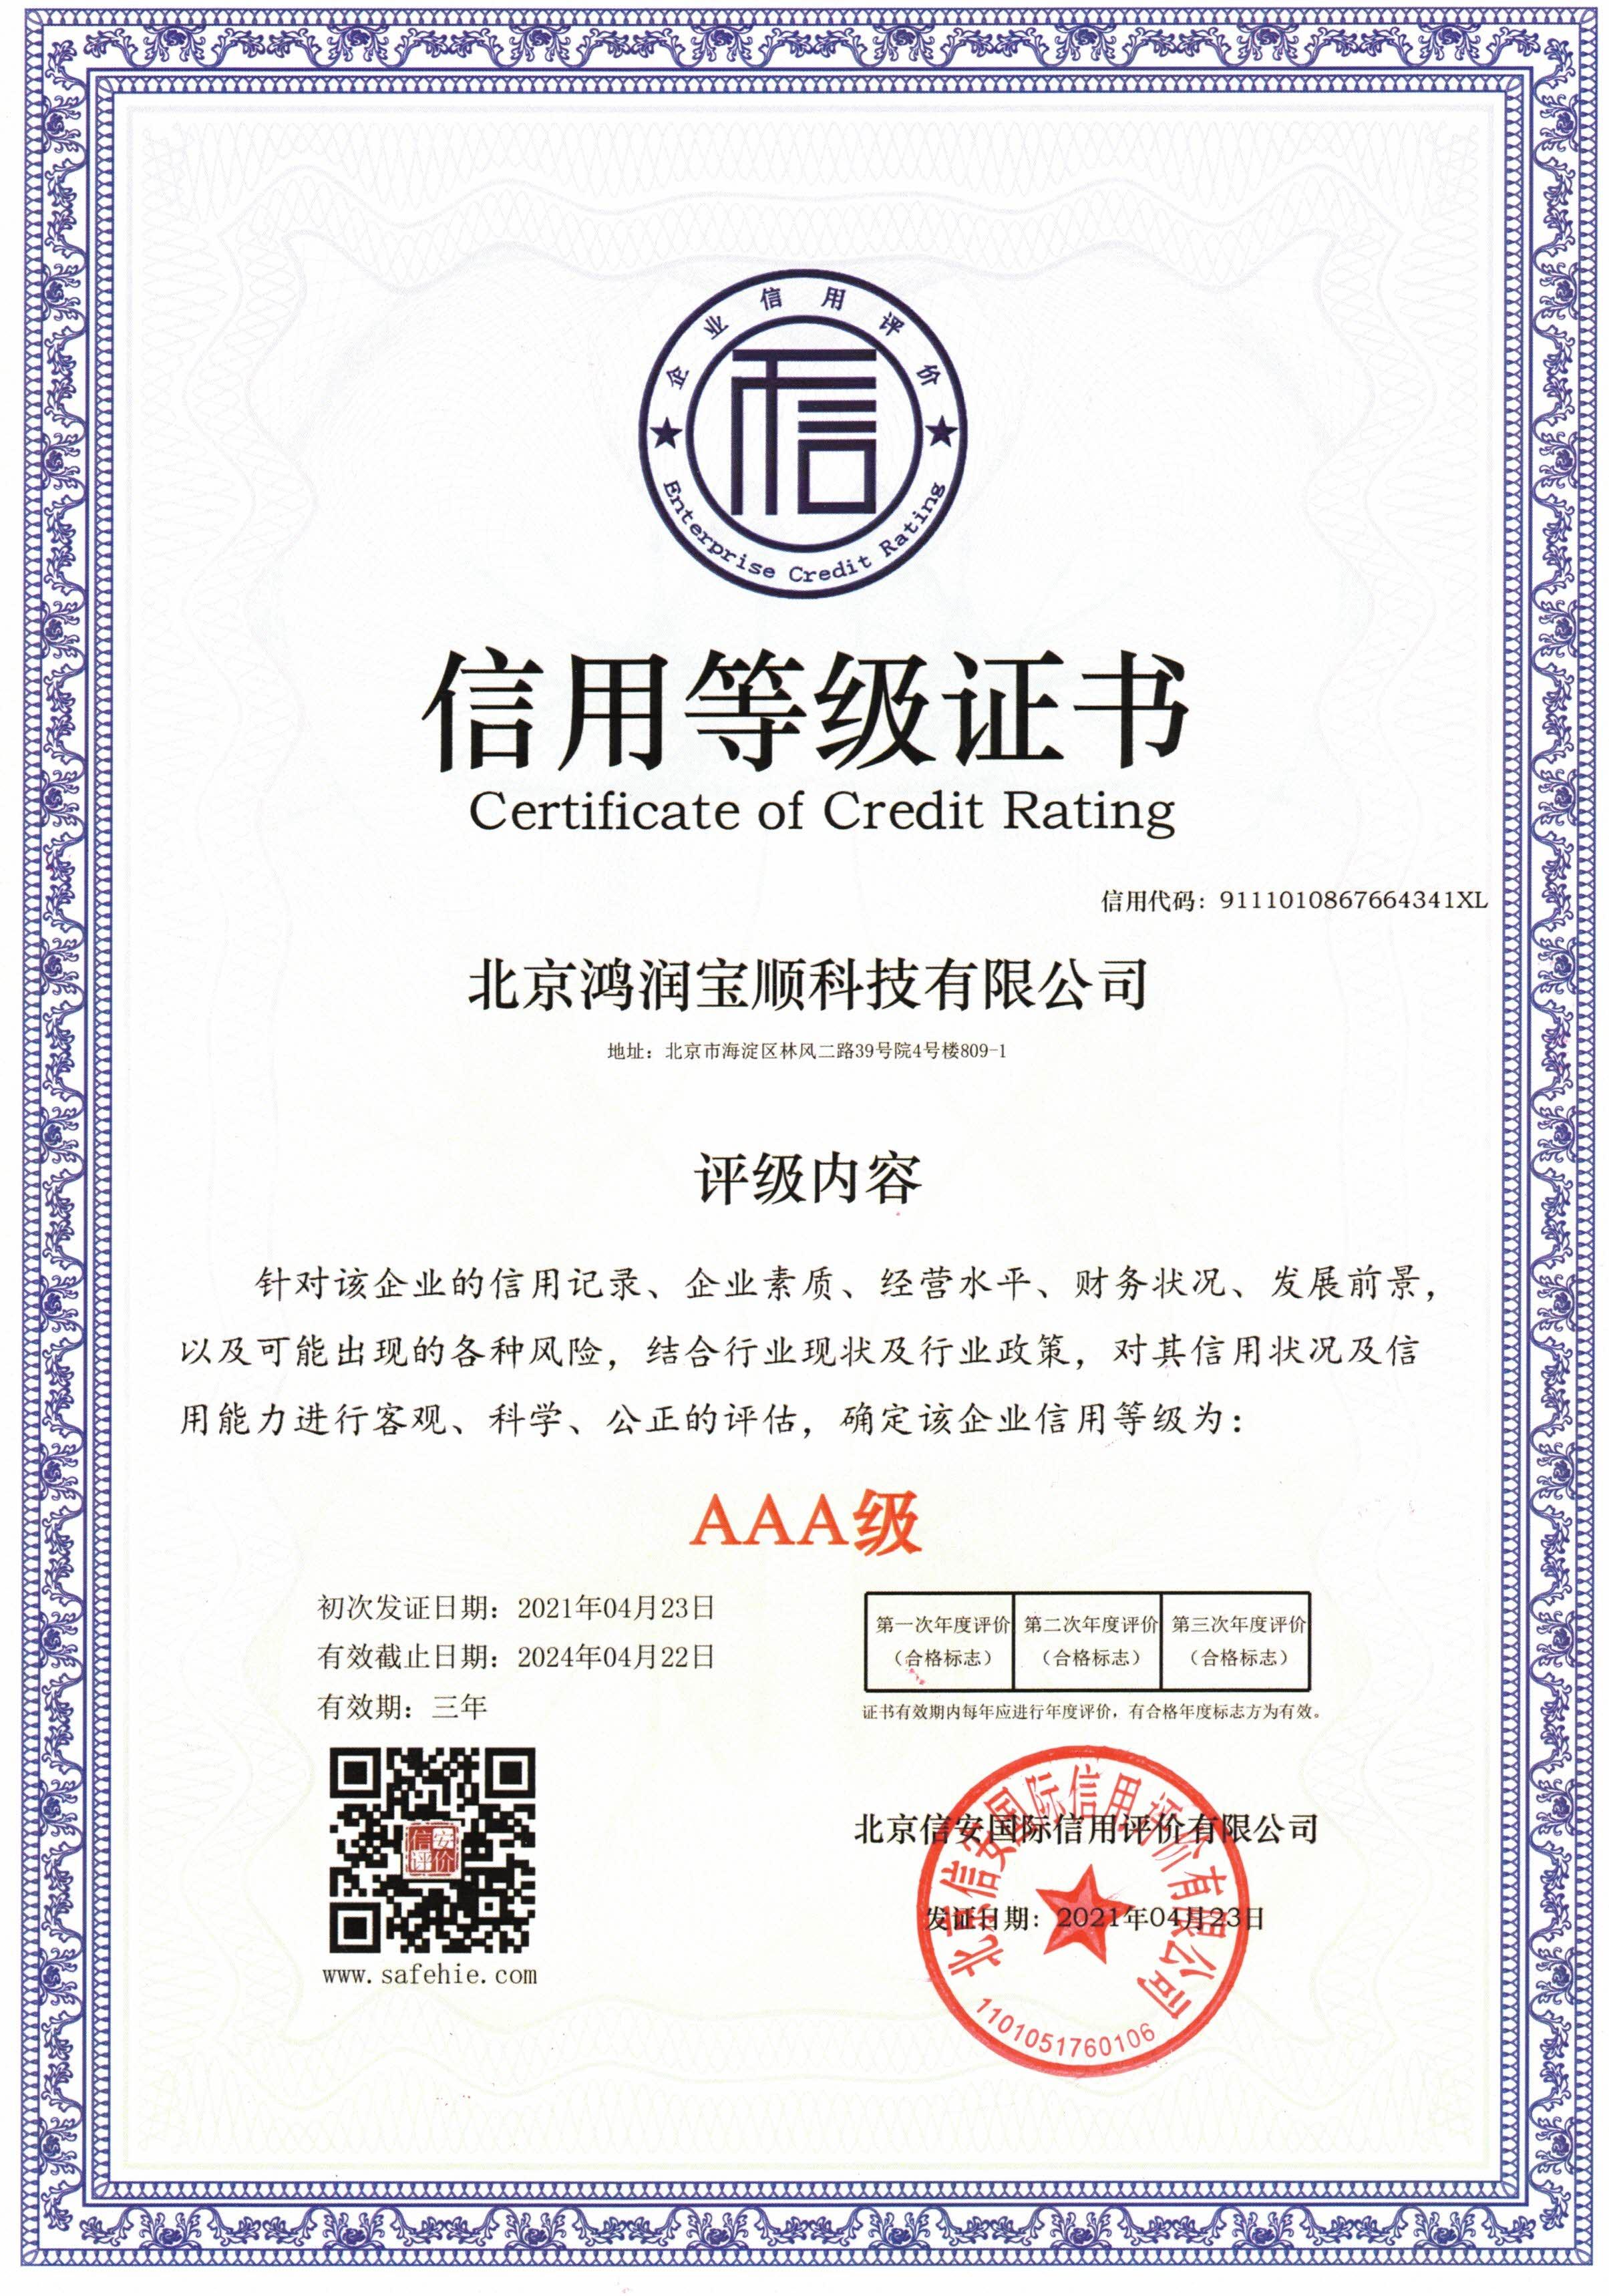 Credit rating certificate AAA